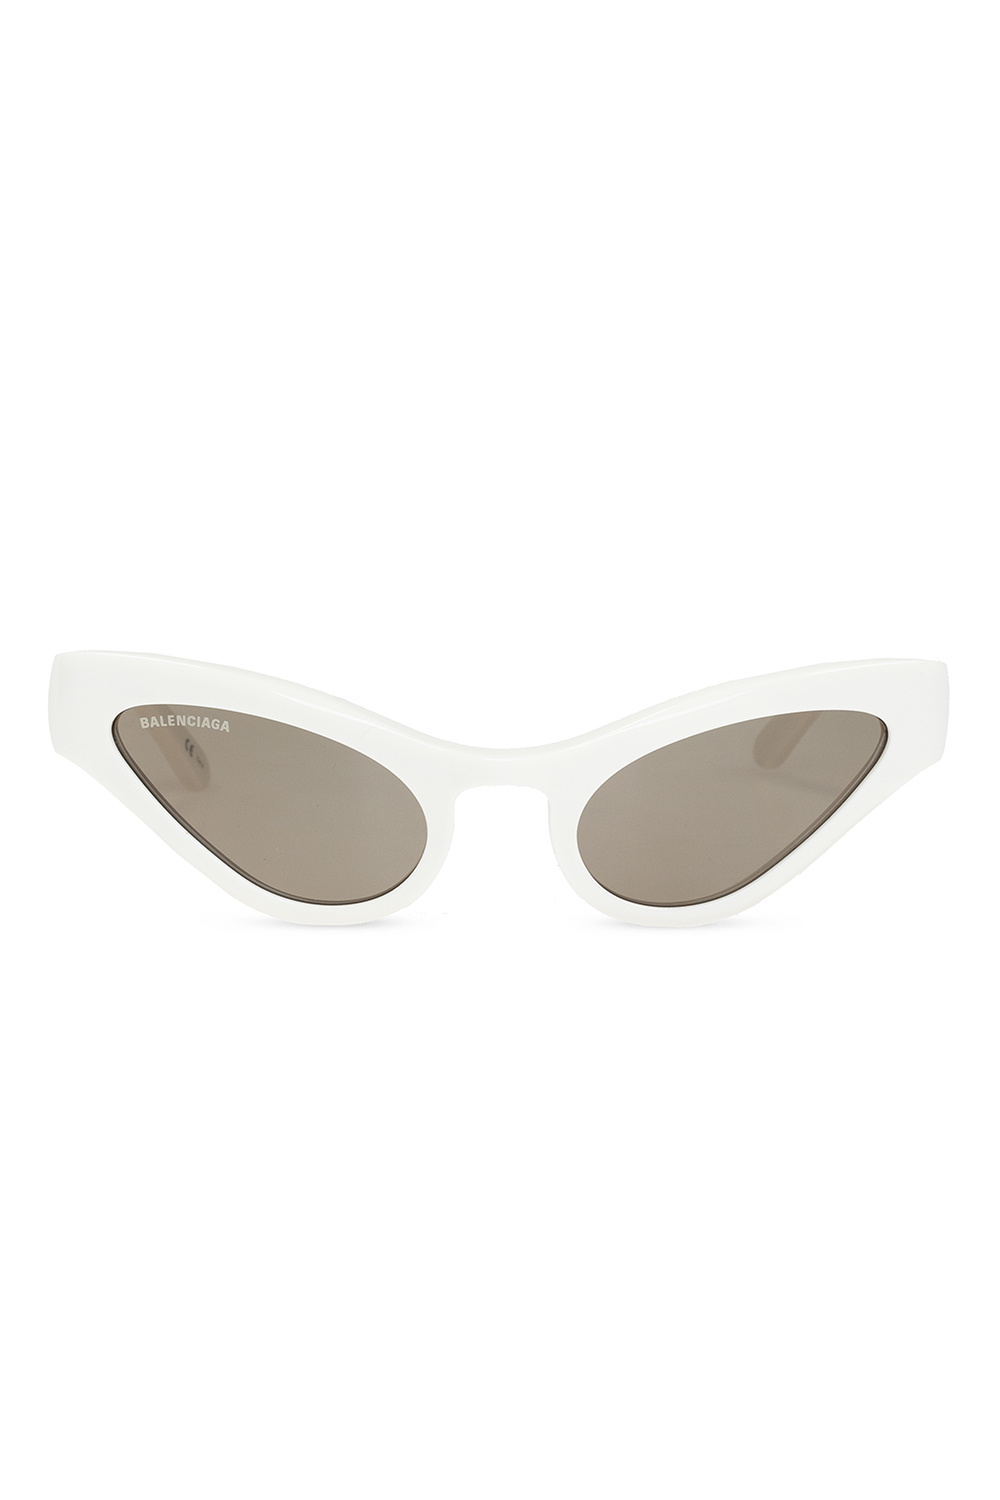 Balenciaga prada eyewear millenials sunglasses item